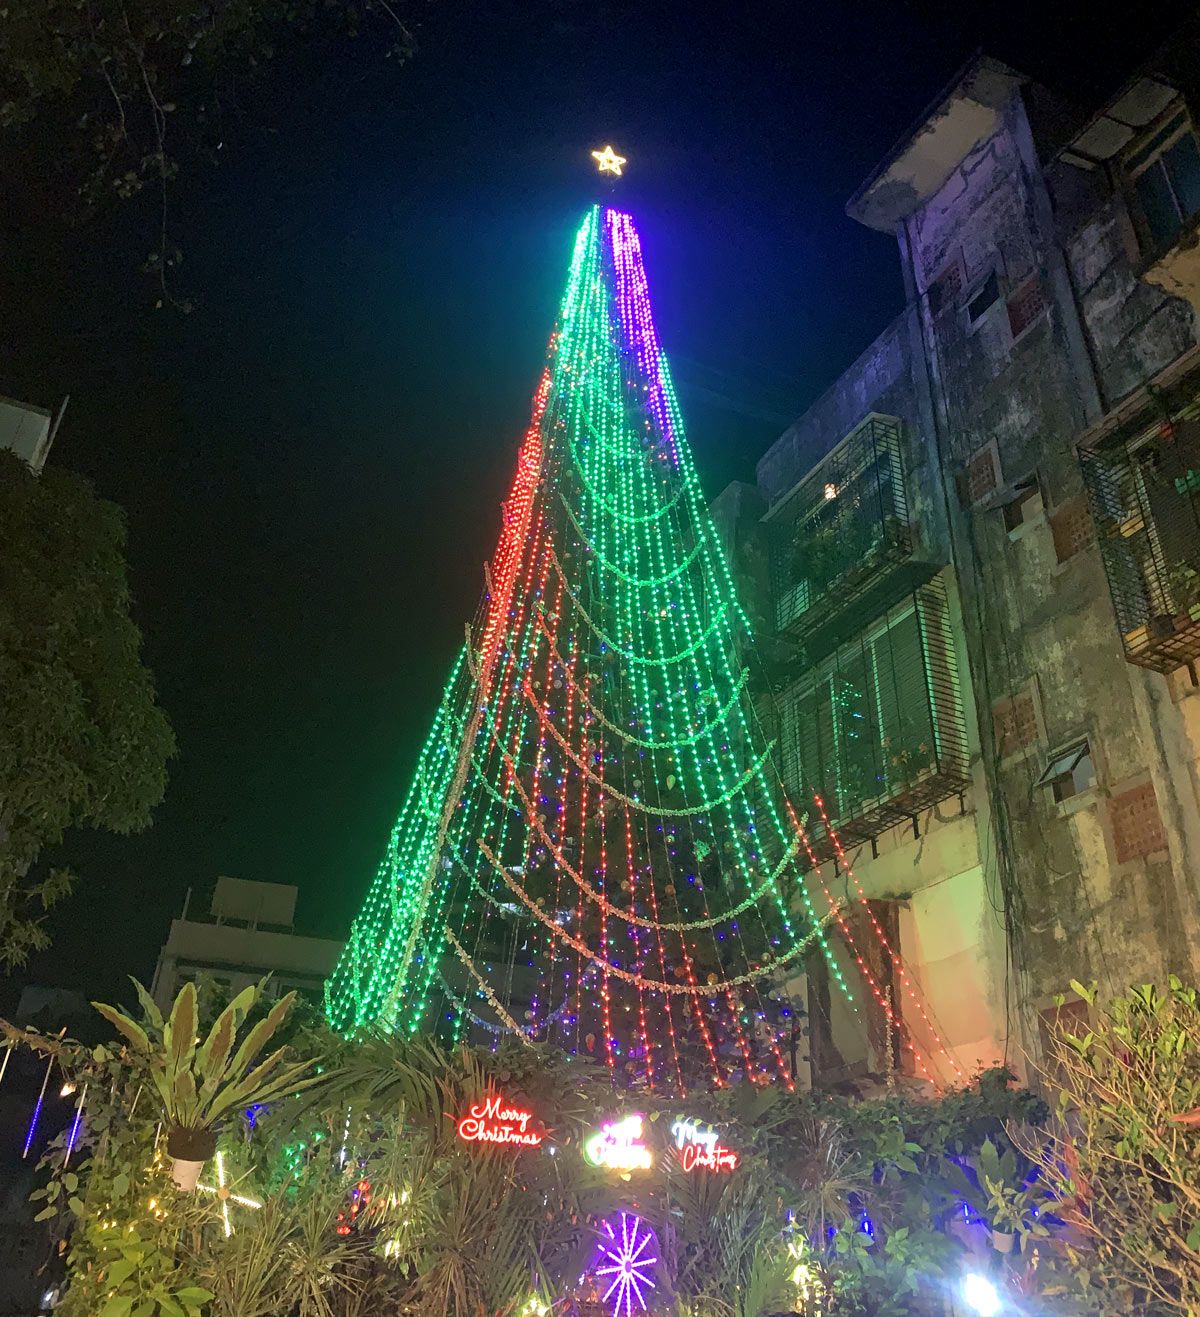 Tallest Christmas tree